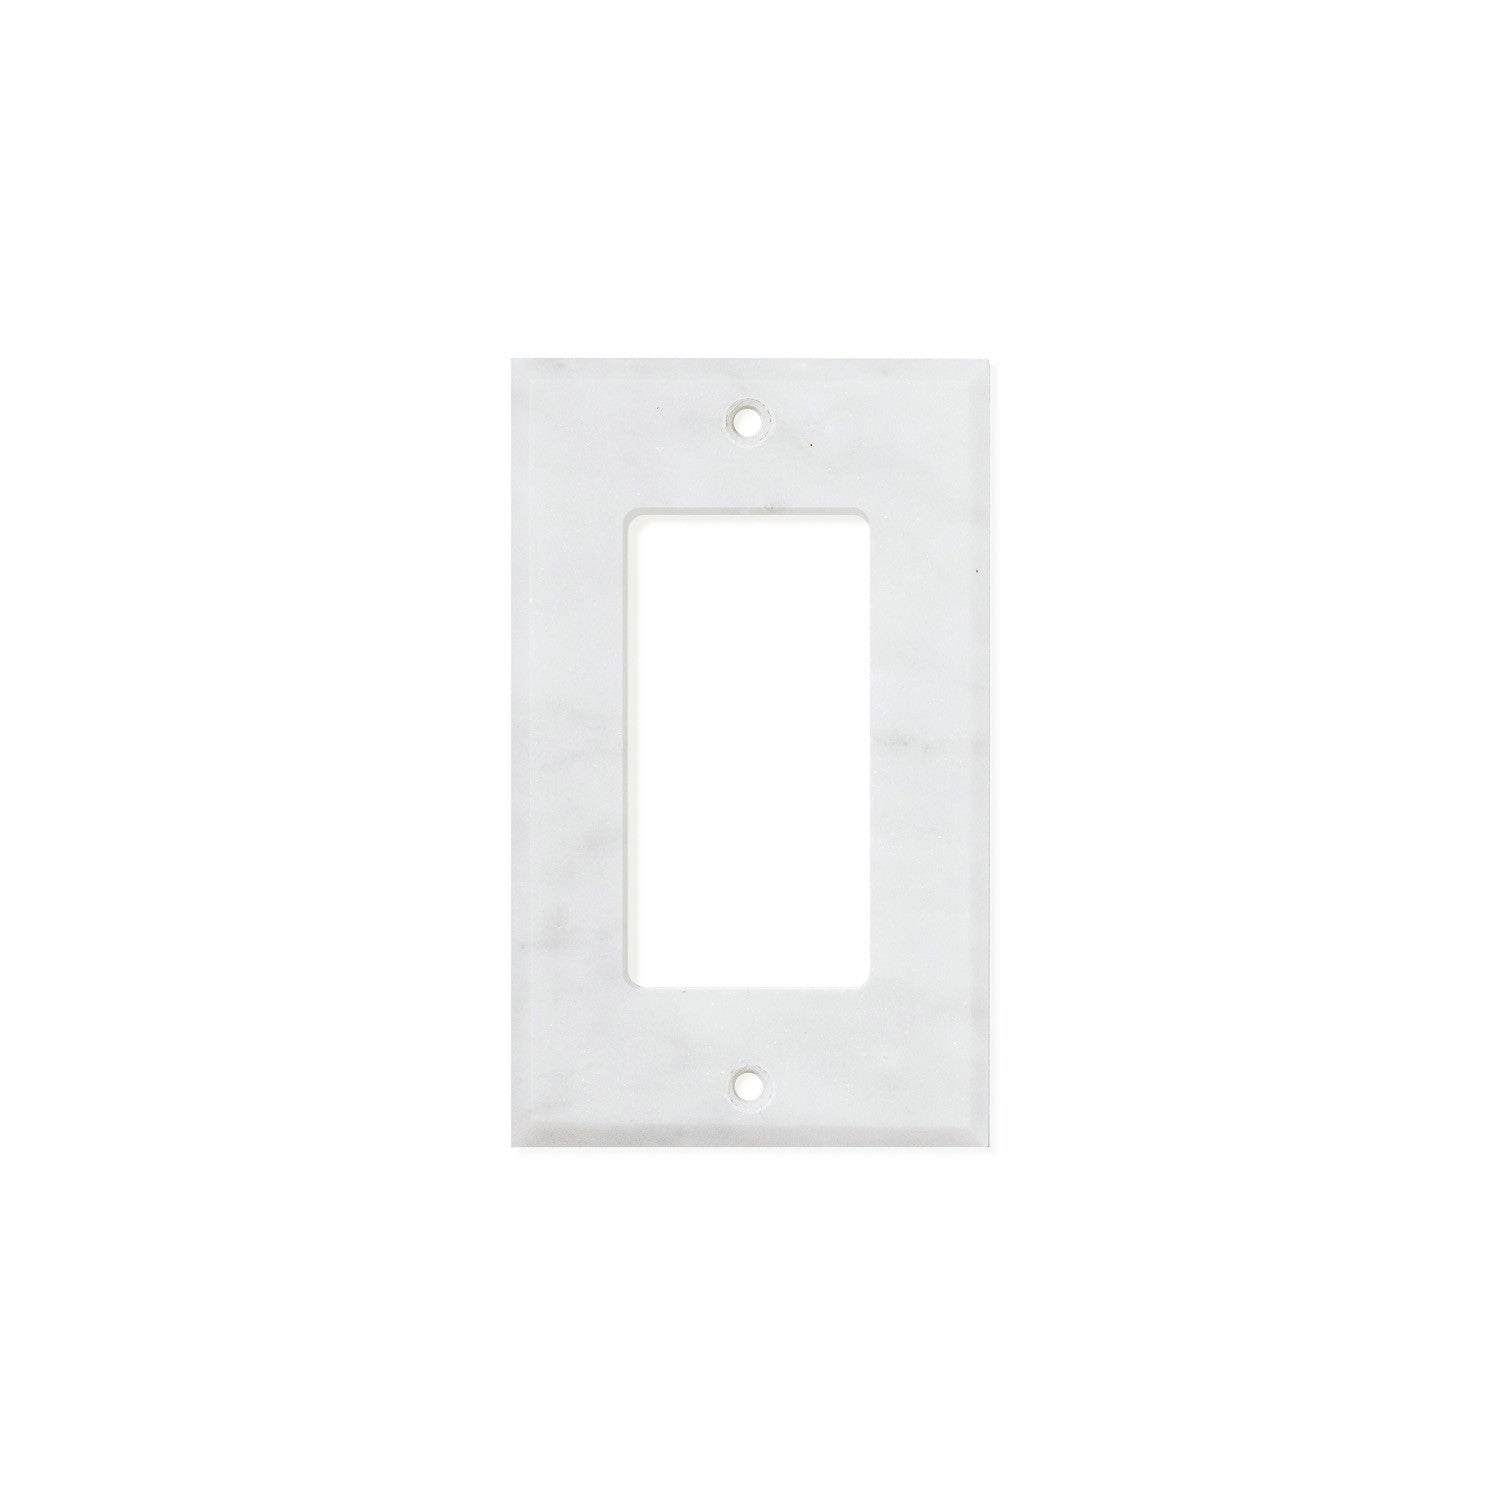 Bianco Carrara (Carrara White) Marble Switch Plate Cover, Honed (SINGLE ROCKER) - Tilephile